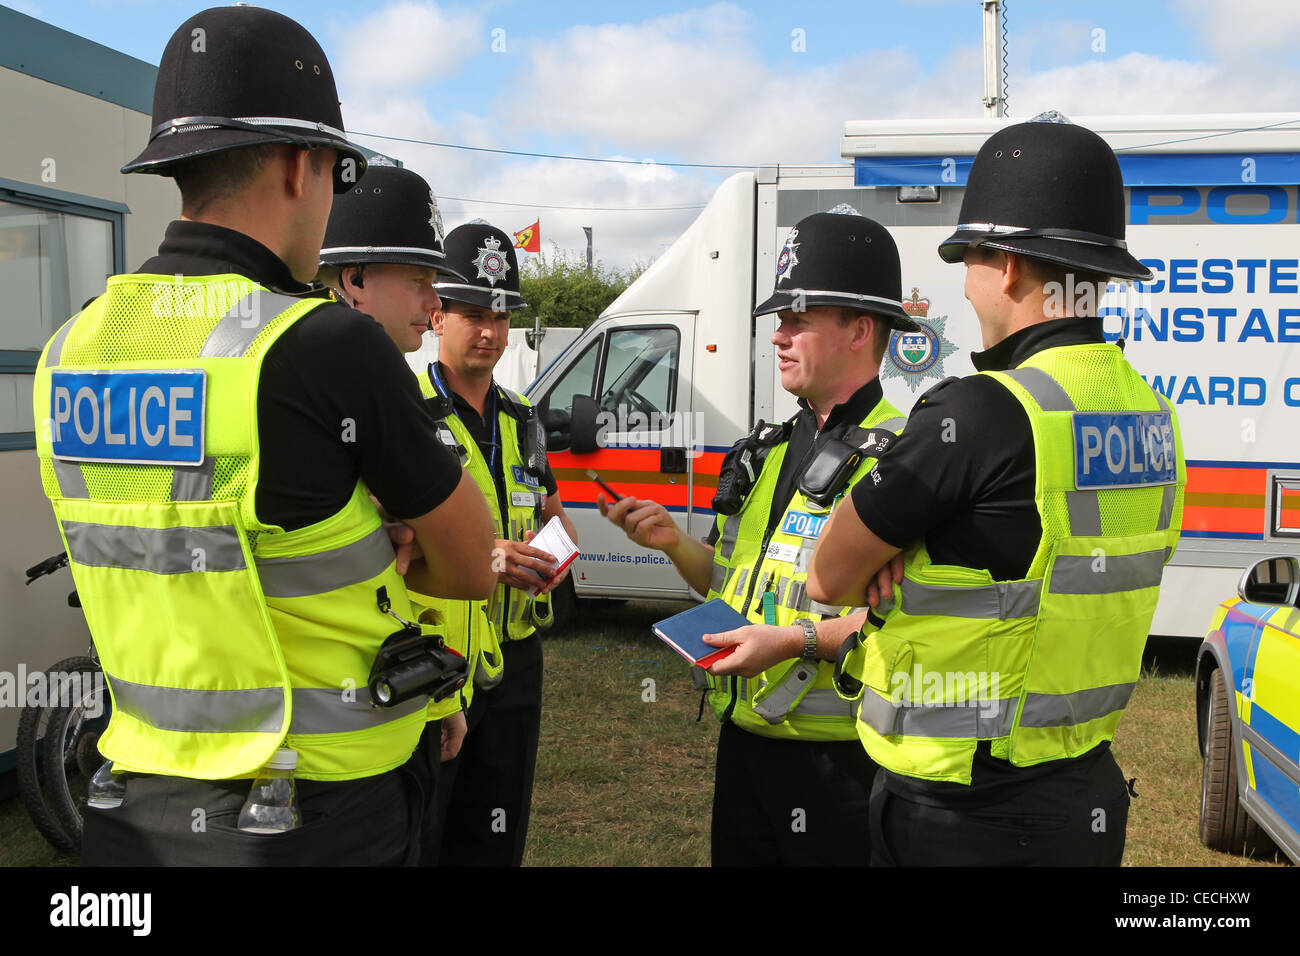 Policemen discuss security at the British Formula one Grand Prix Stock Photo